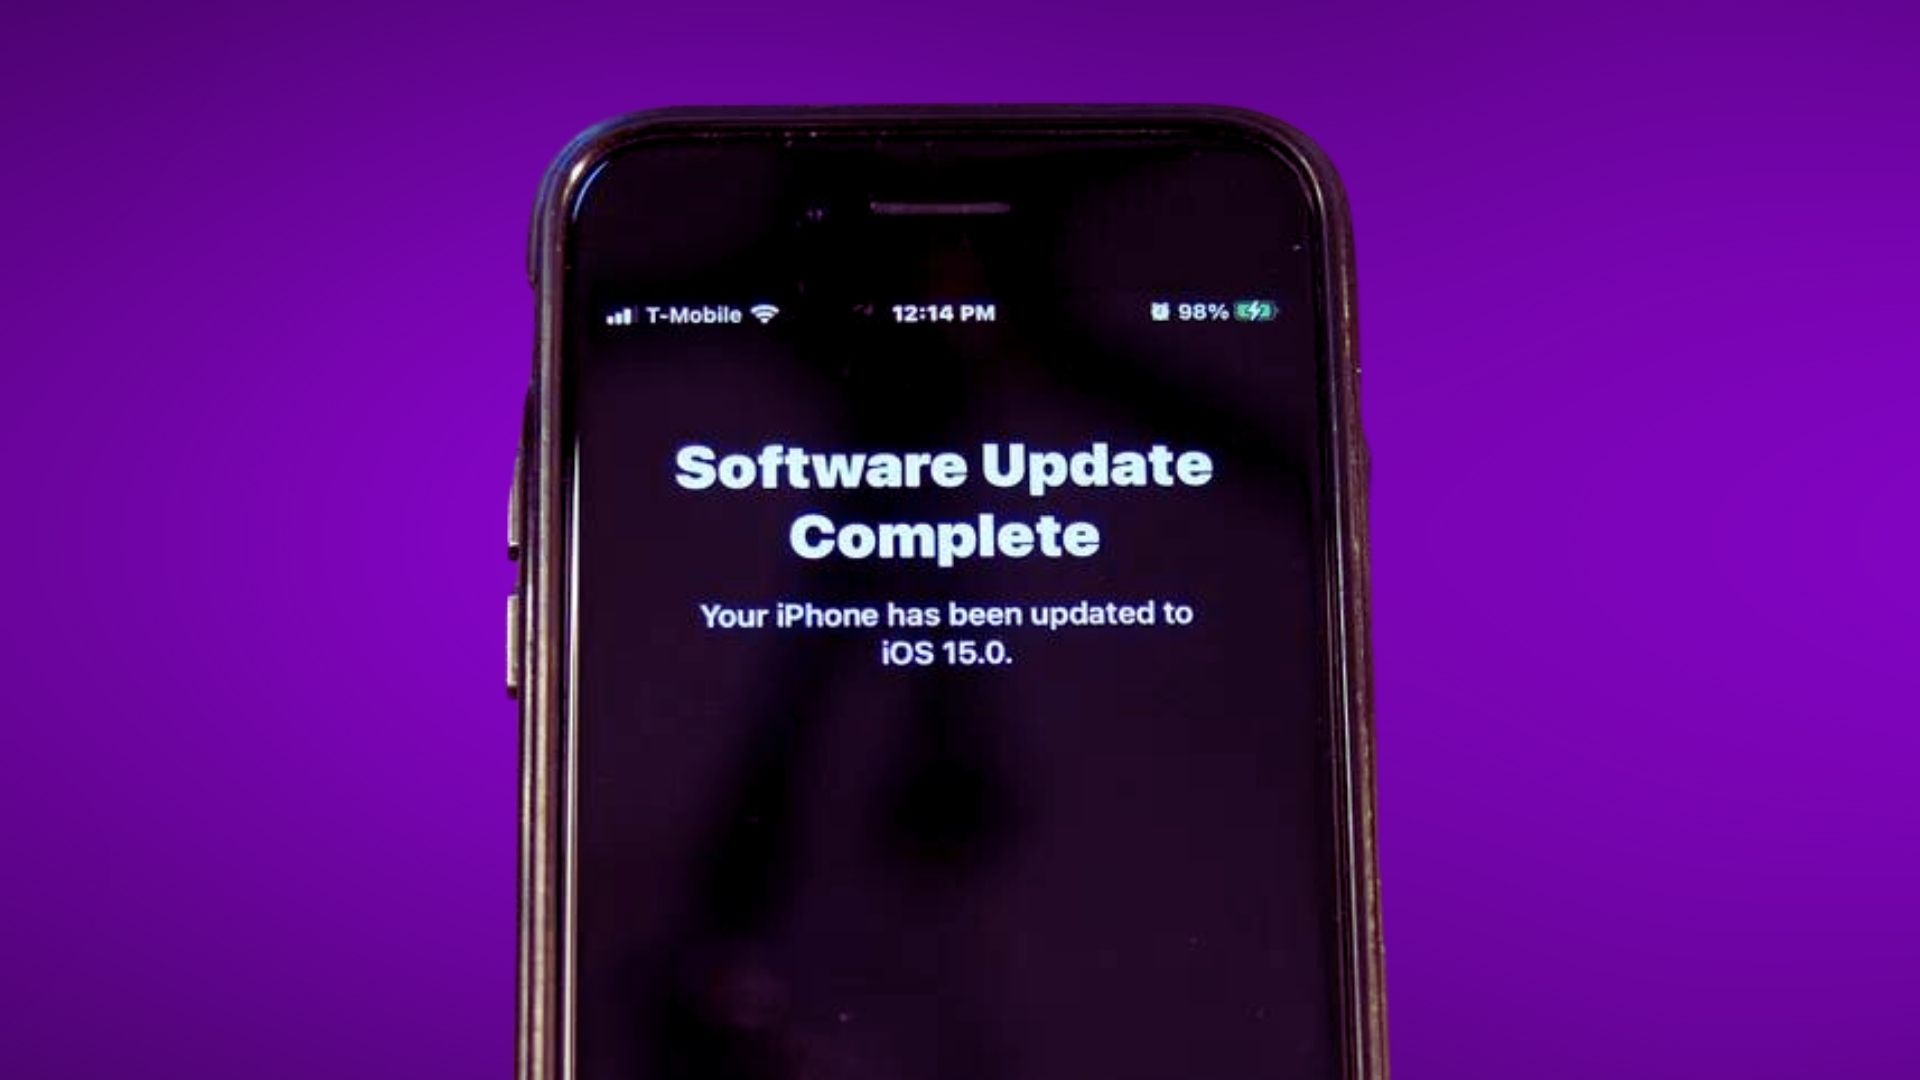 Update iOS Software